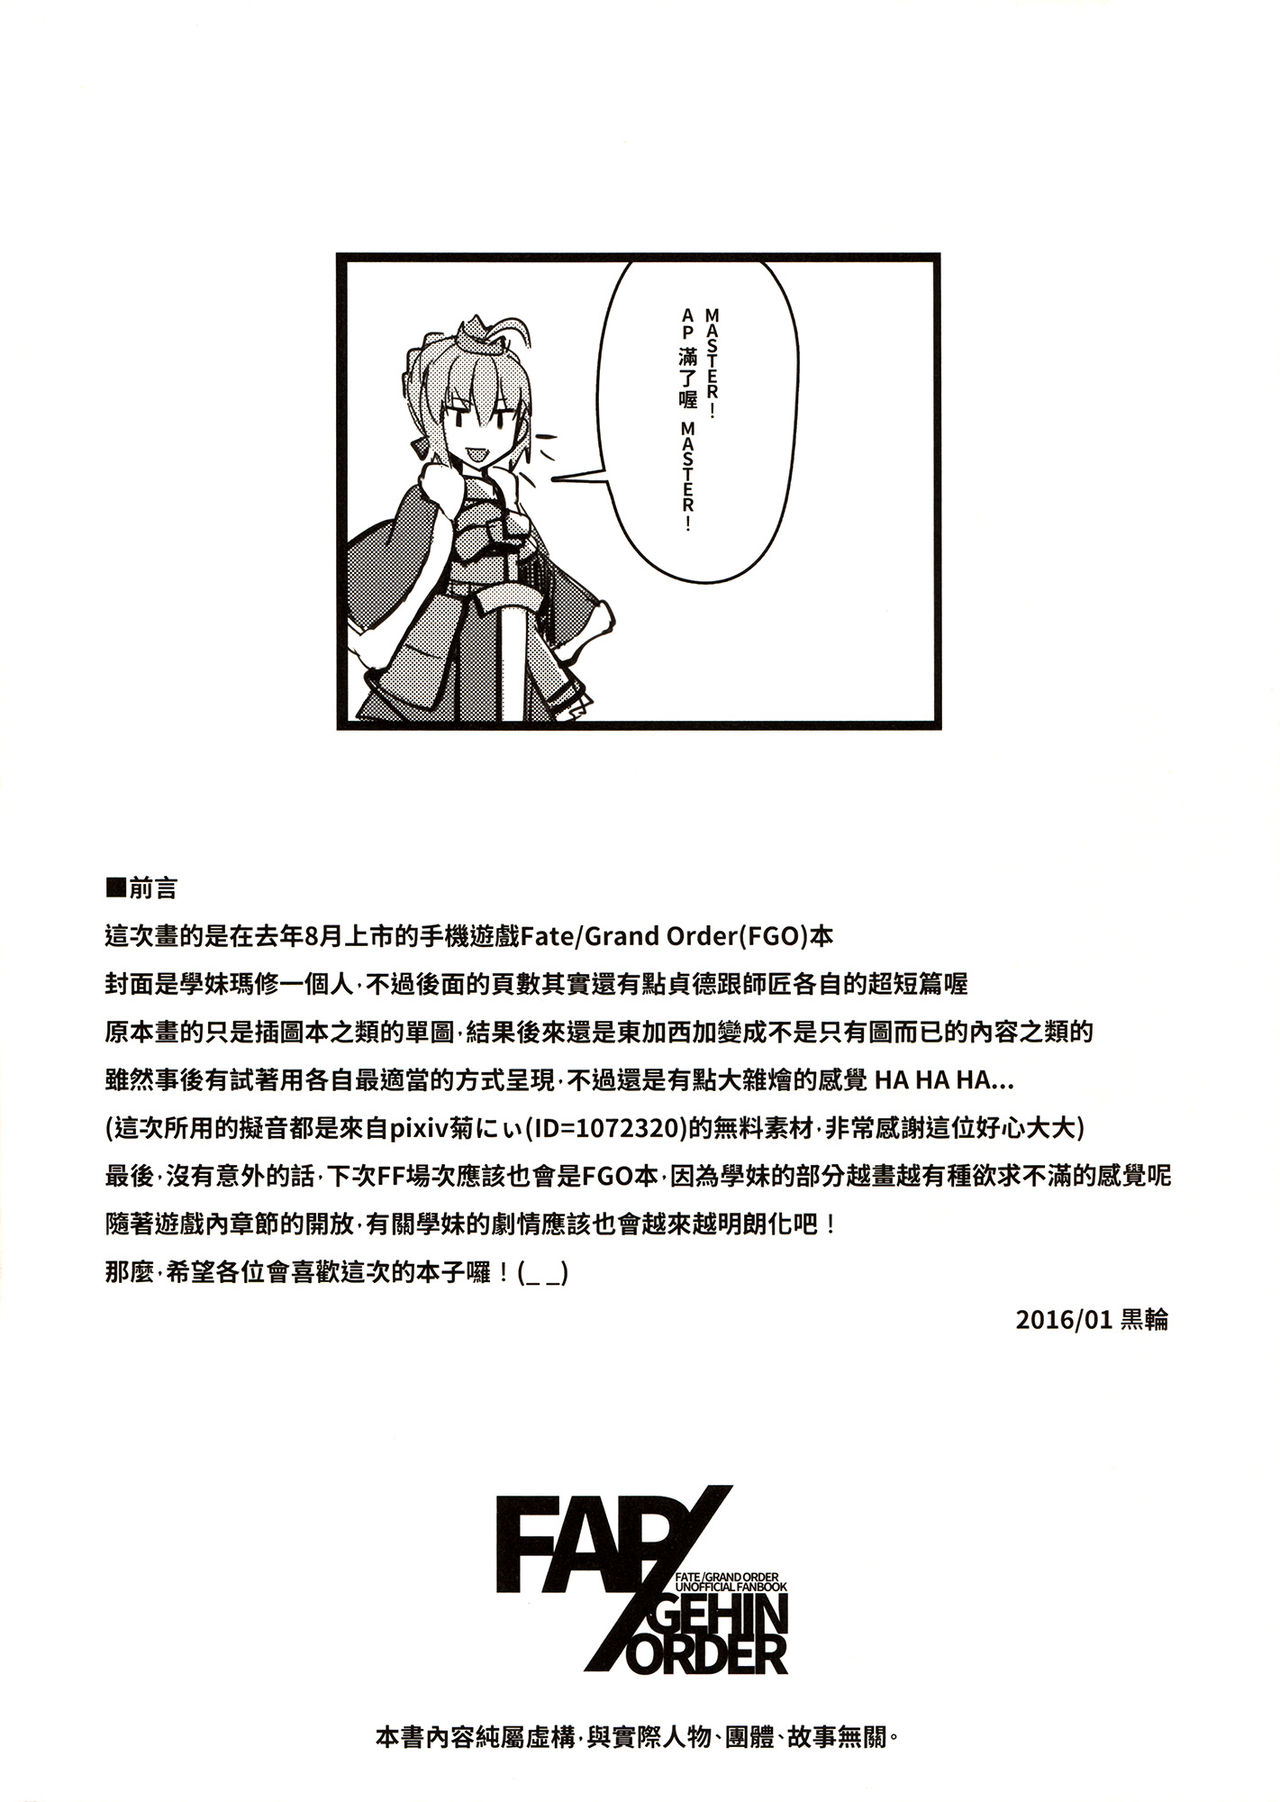 (FF27) [黑輪] FAP/GEHIN ORDER (Fate/Grand Order) [中国語]